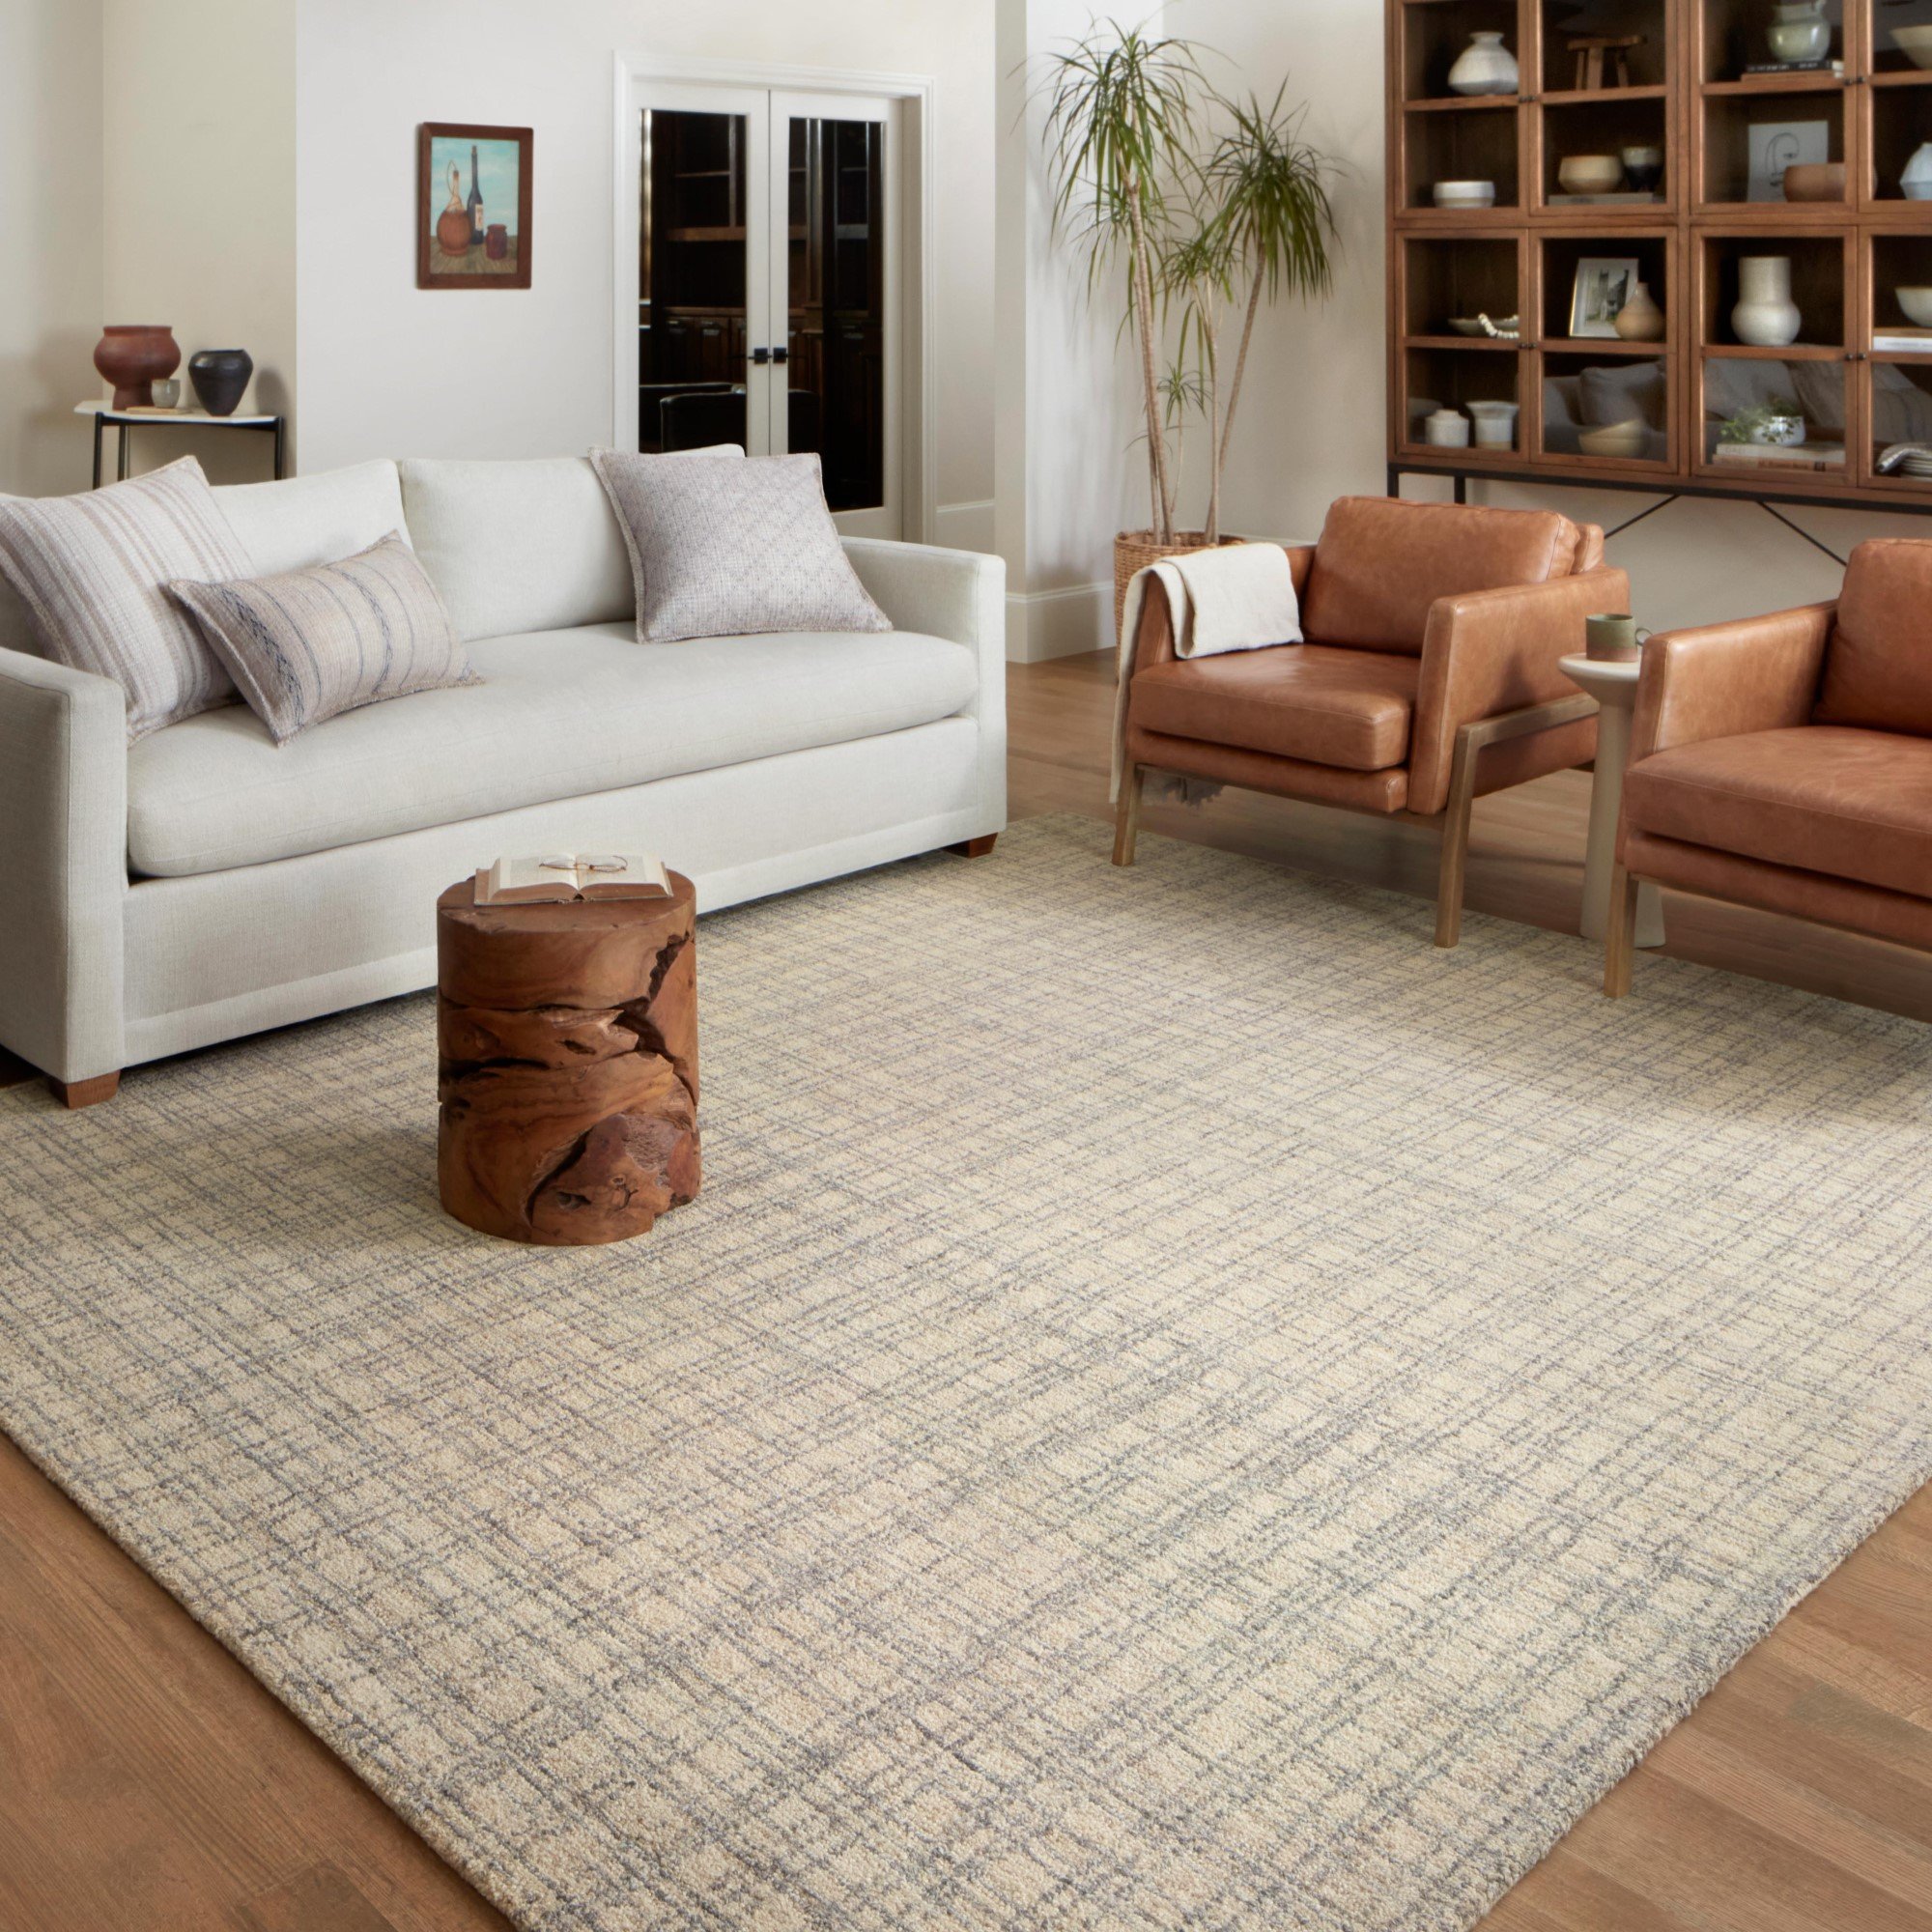 Moroccan Round straw and Raffia rug 40 inch Size round carpet